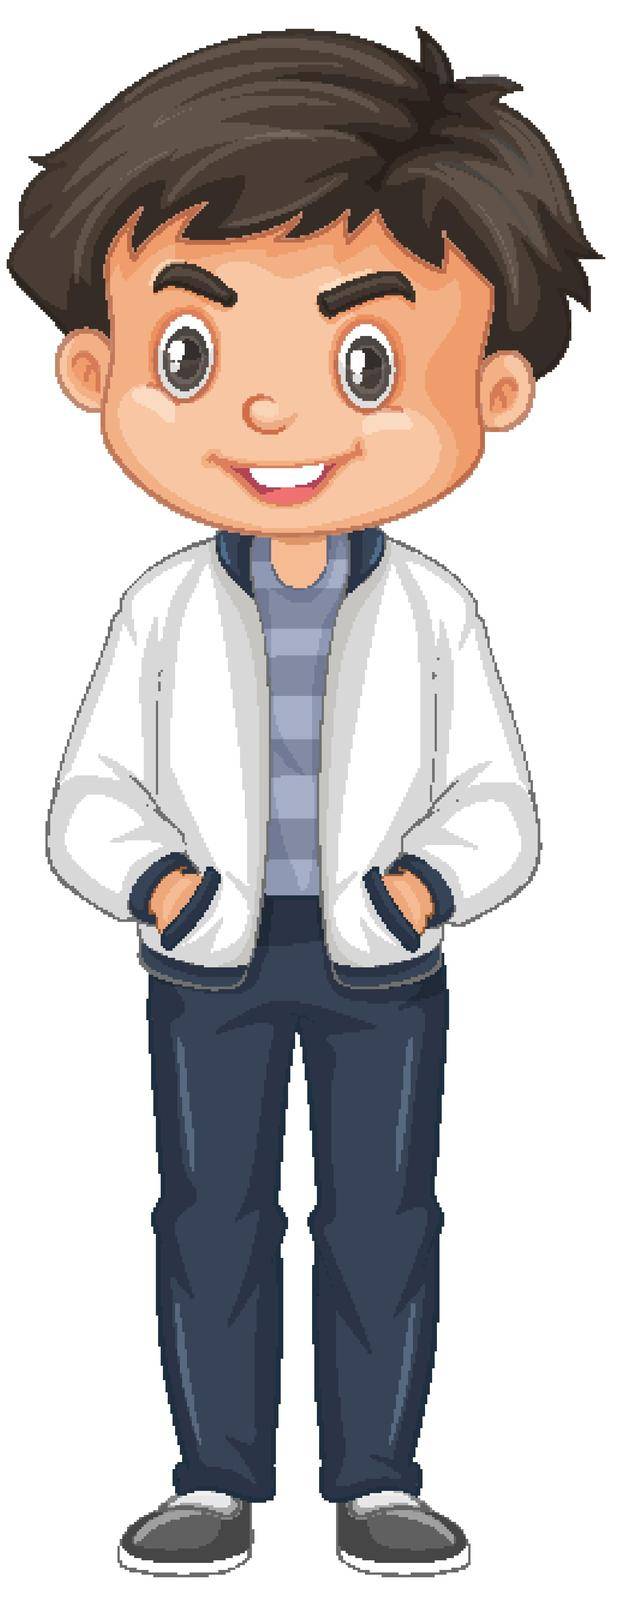 Cute boy in white jacket on white background illustration